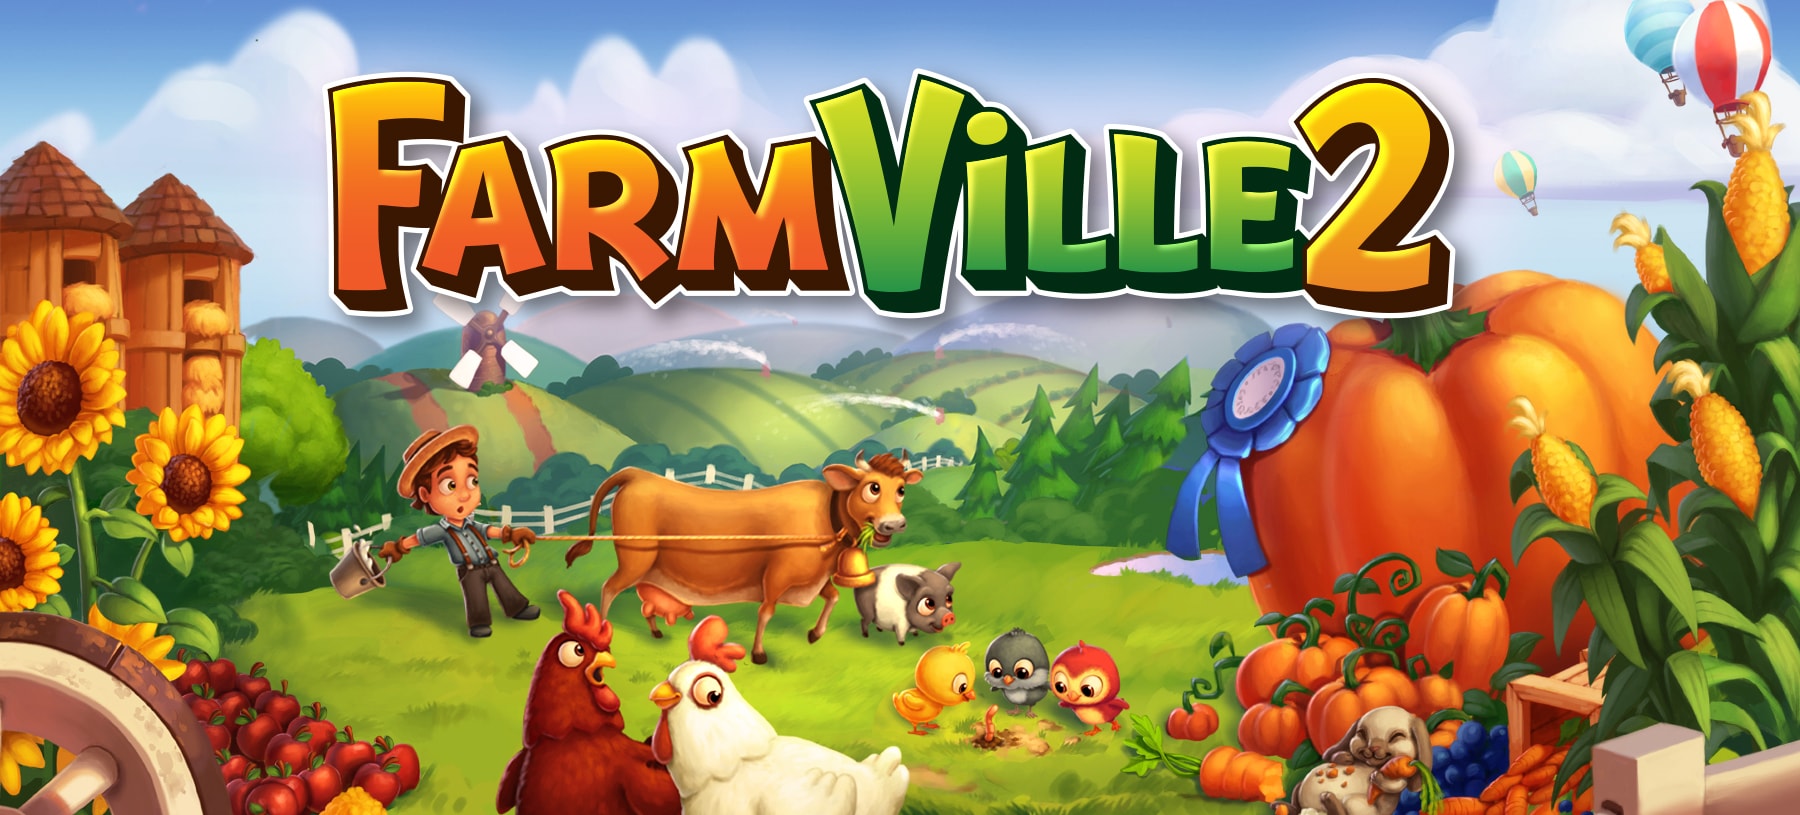 FarmVille2 MainPage Banner